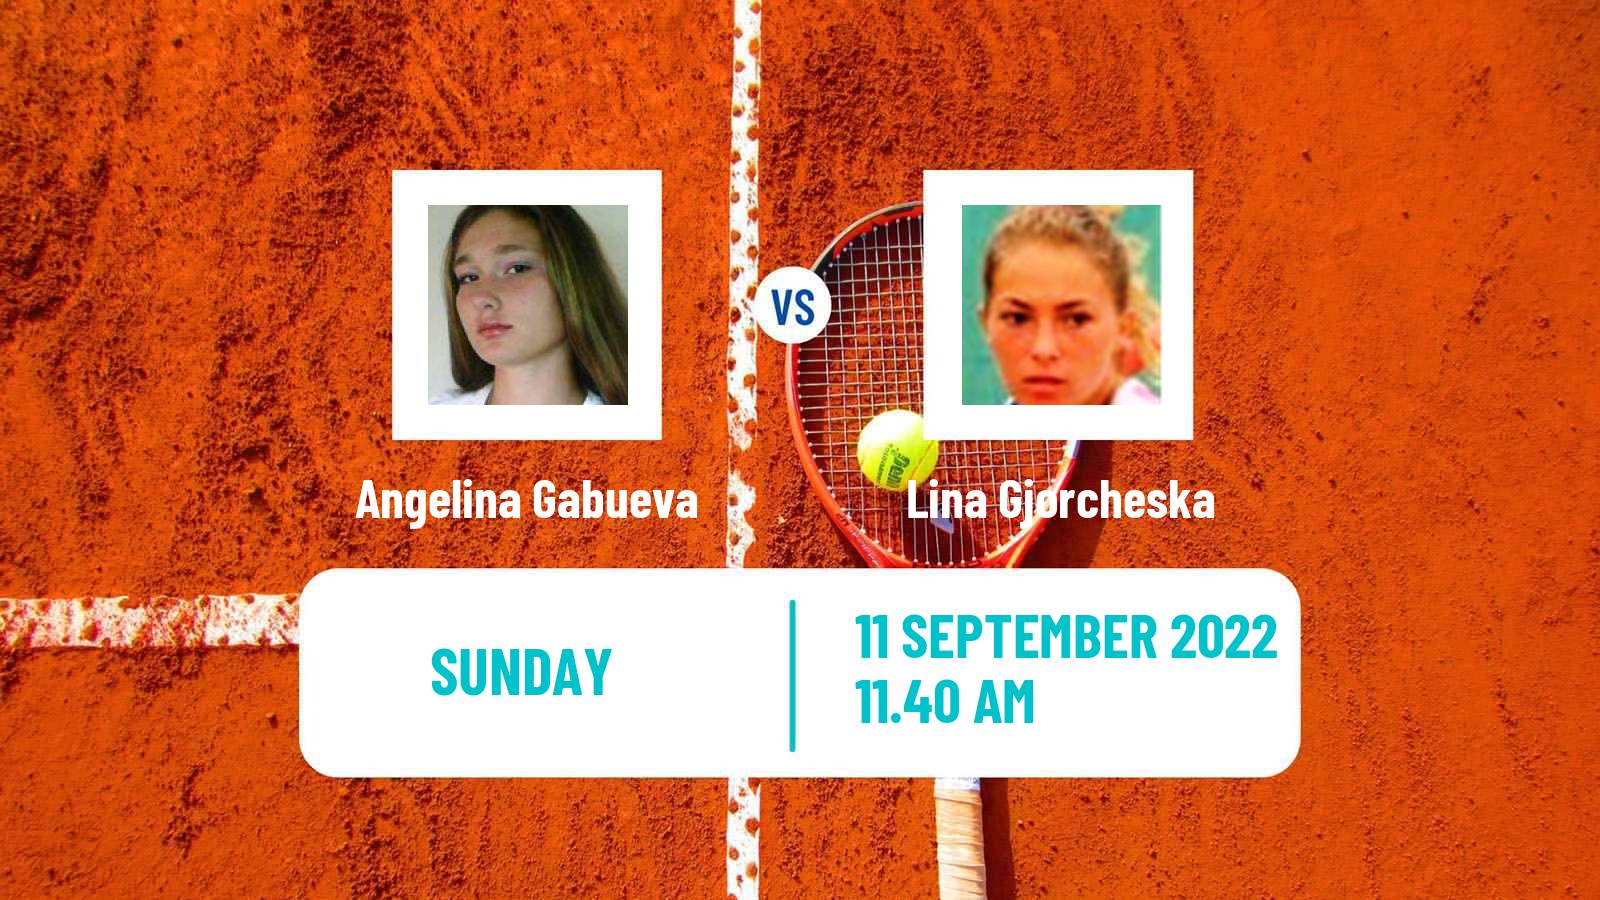 Tennis WTA Portoroz Angelina Gabueva - Lina Gjorcheska